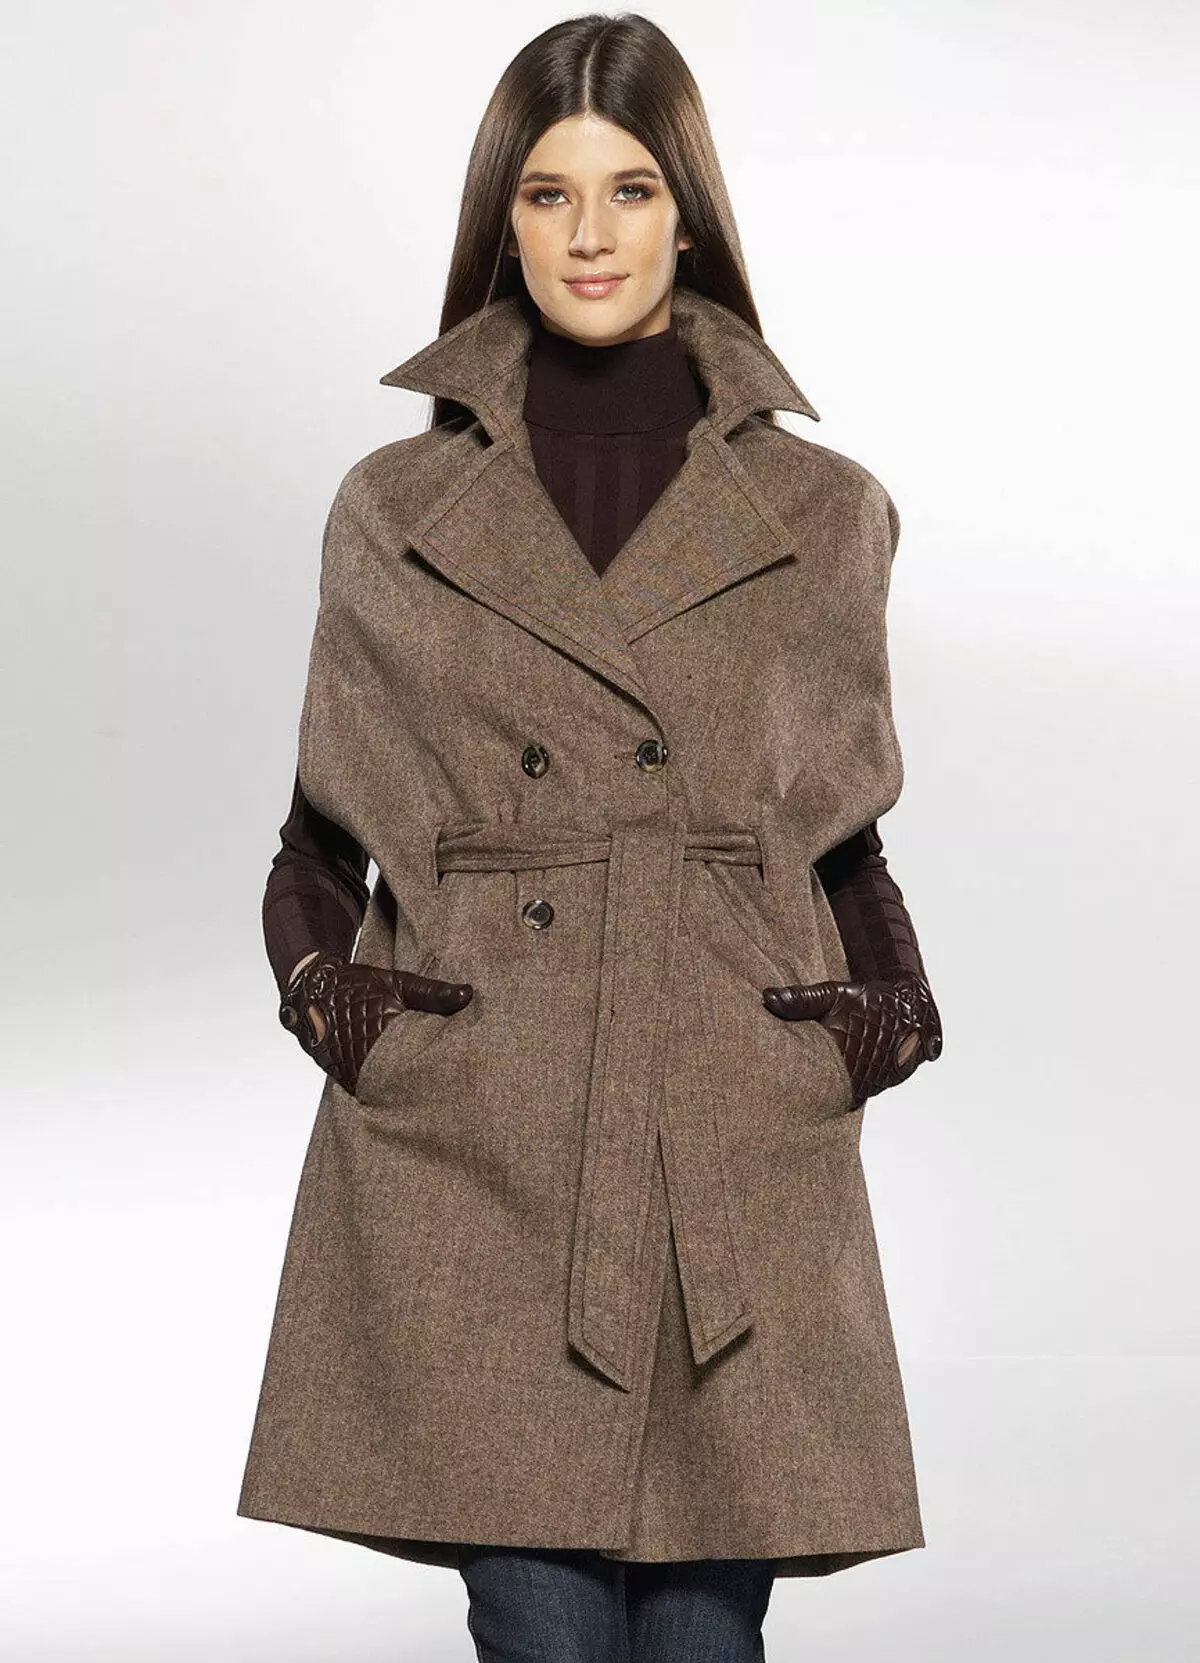 Mantel bulu atau domba (137 foto): apa yang lebih baik dan lebih hangat untuk mantel bulu musim dingin, mantel, jaket atau jaket down daripada mantel berbeda dari domba 738_41